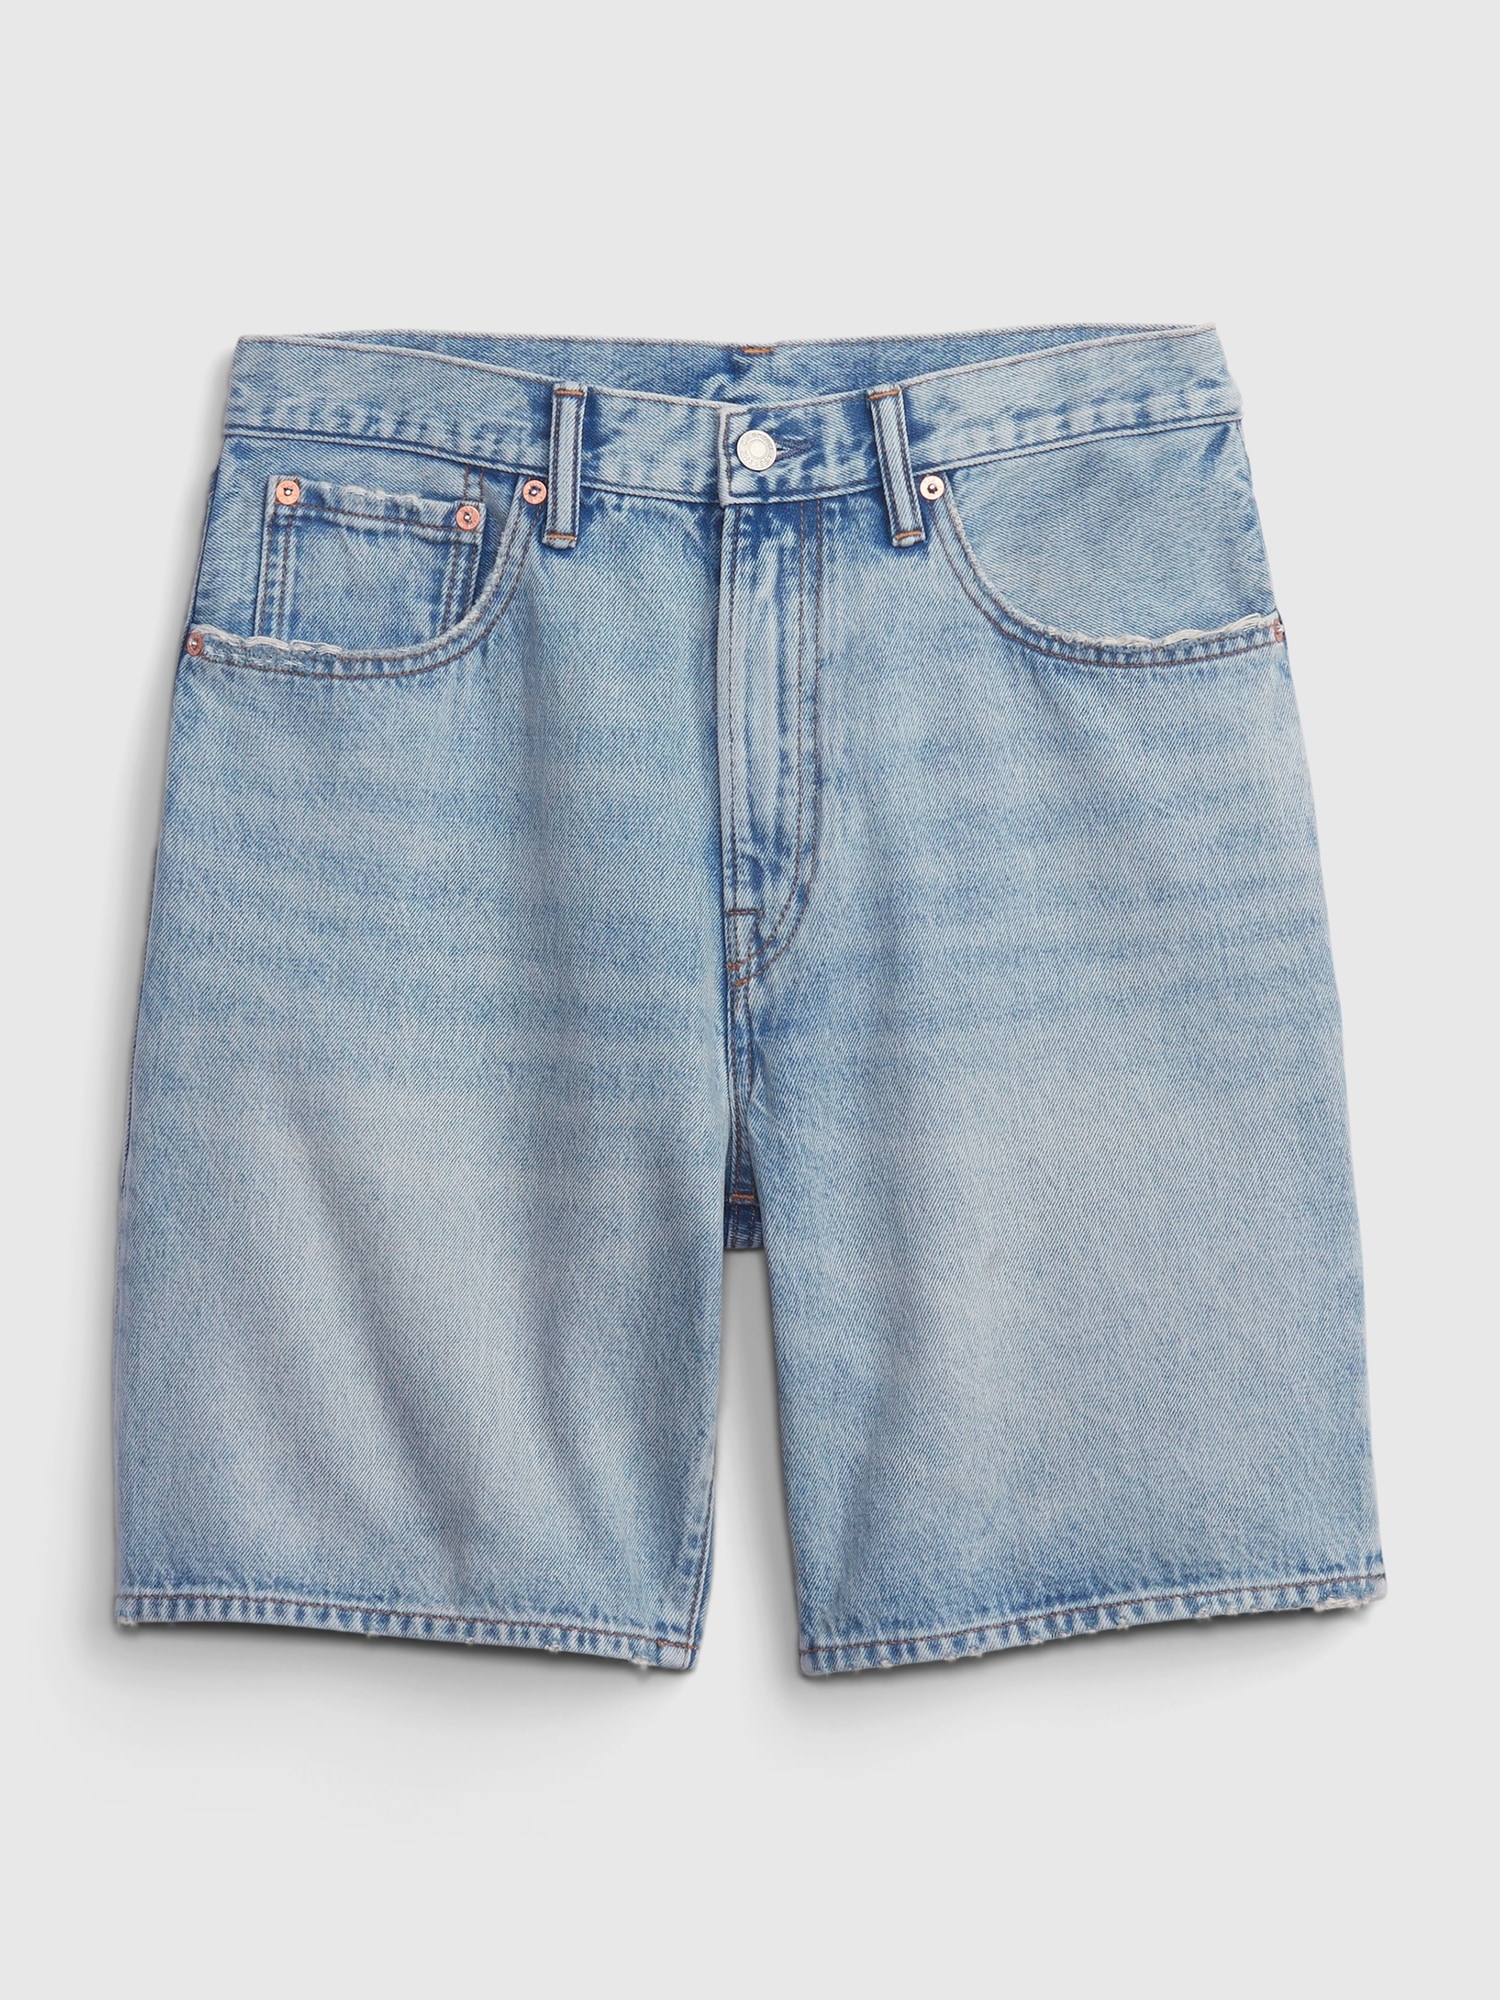 Men's 90s Loose Denim Shorts by Gap Medium Wash Size 38W